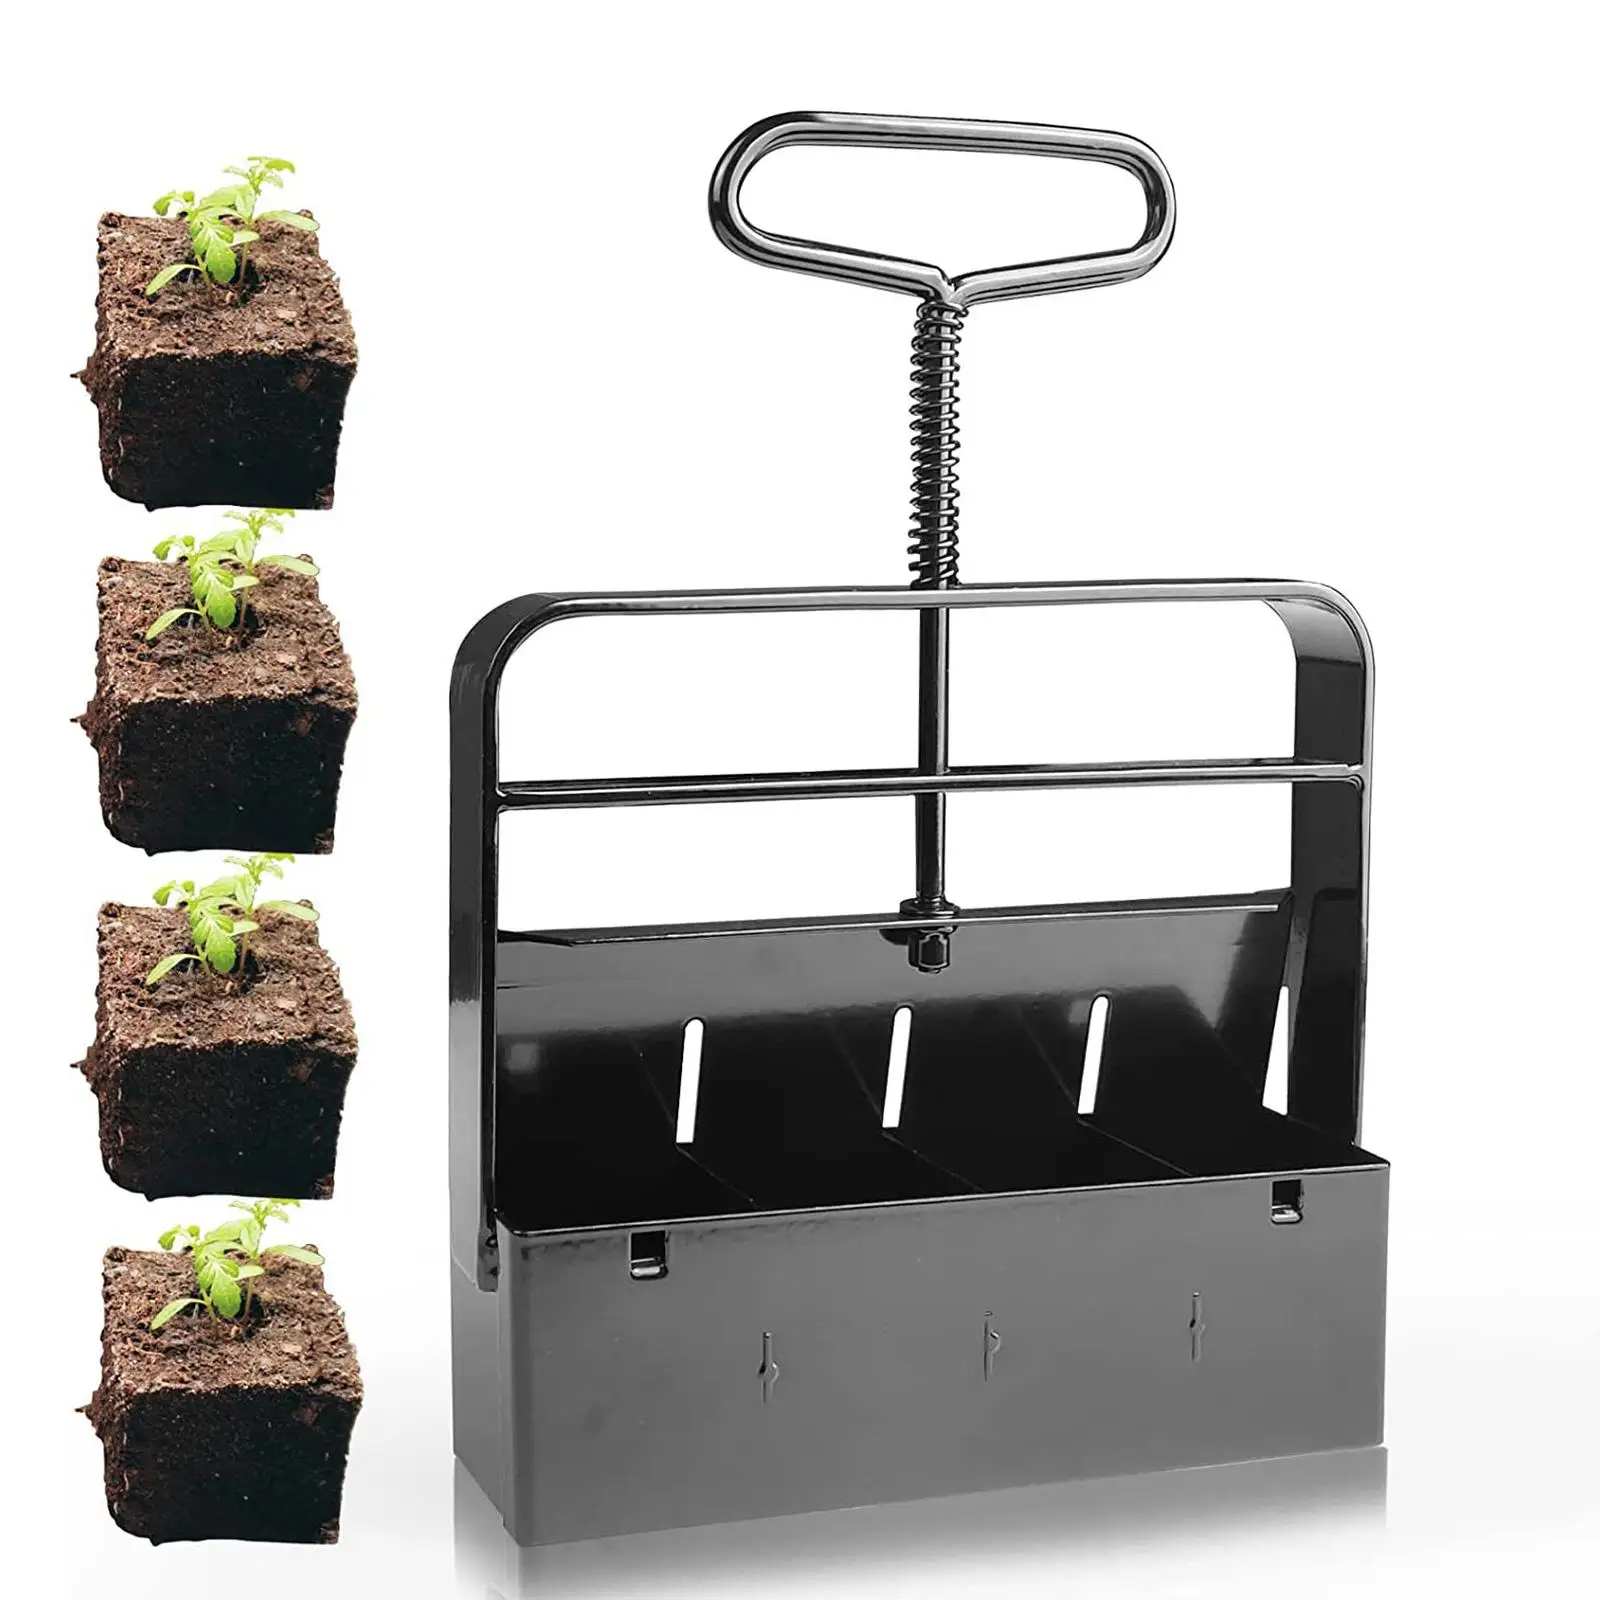 2 inch Mould Soil Blocker for Greenhouse Seedling Outdoor Vegetable Fruits